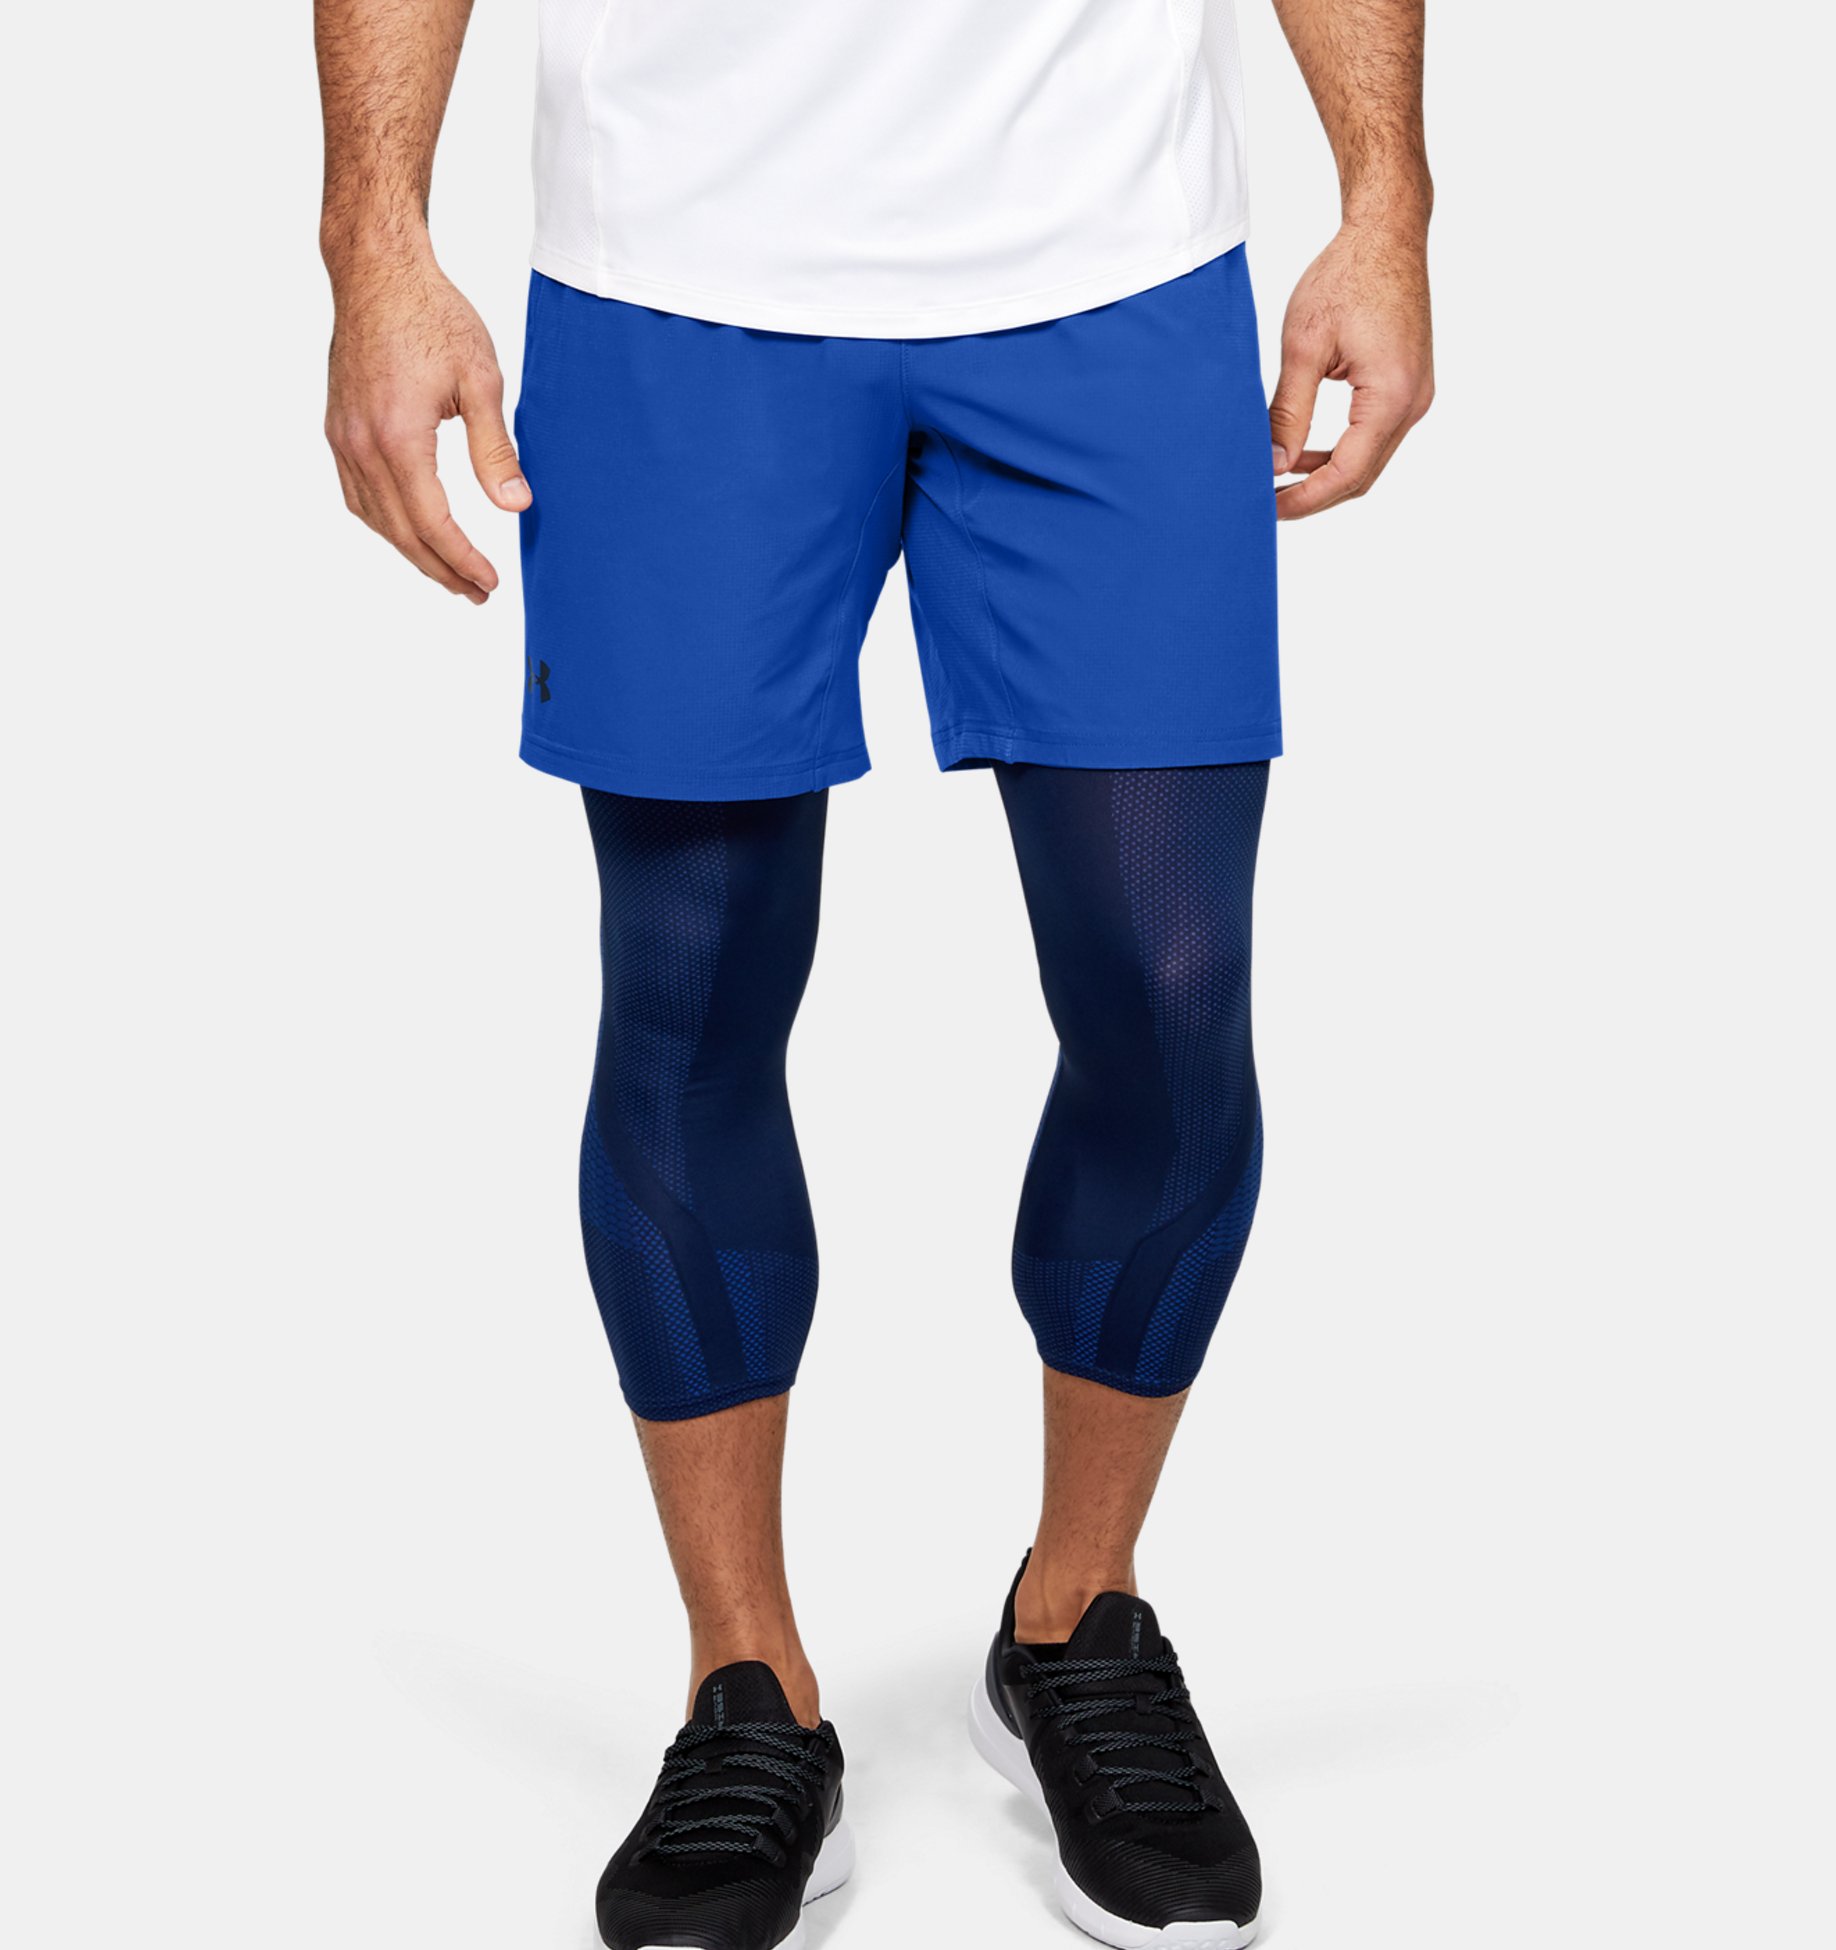 Under Armour Men’s Linerless Running Shorts 1321724 Blue 483 Size XL 